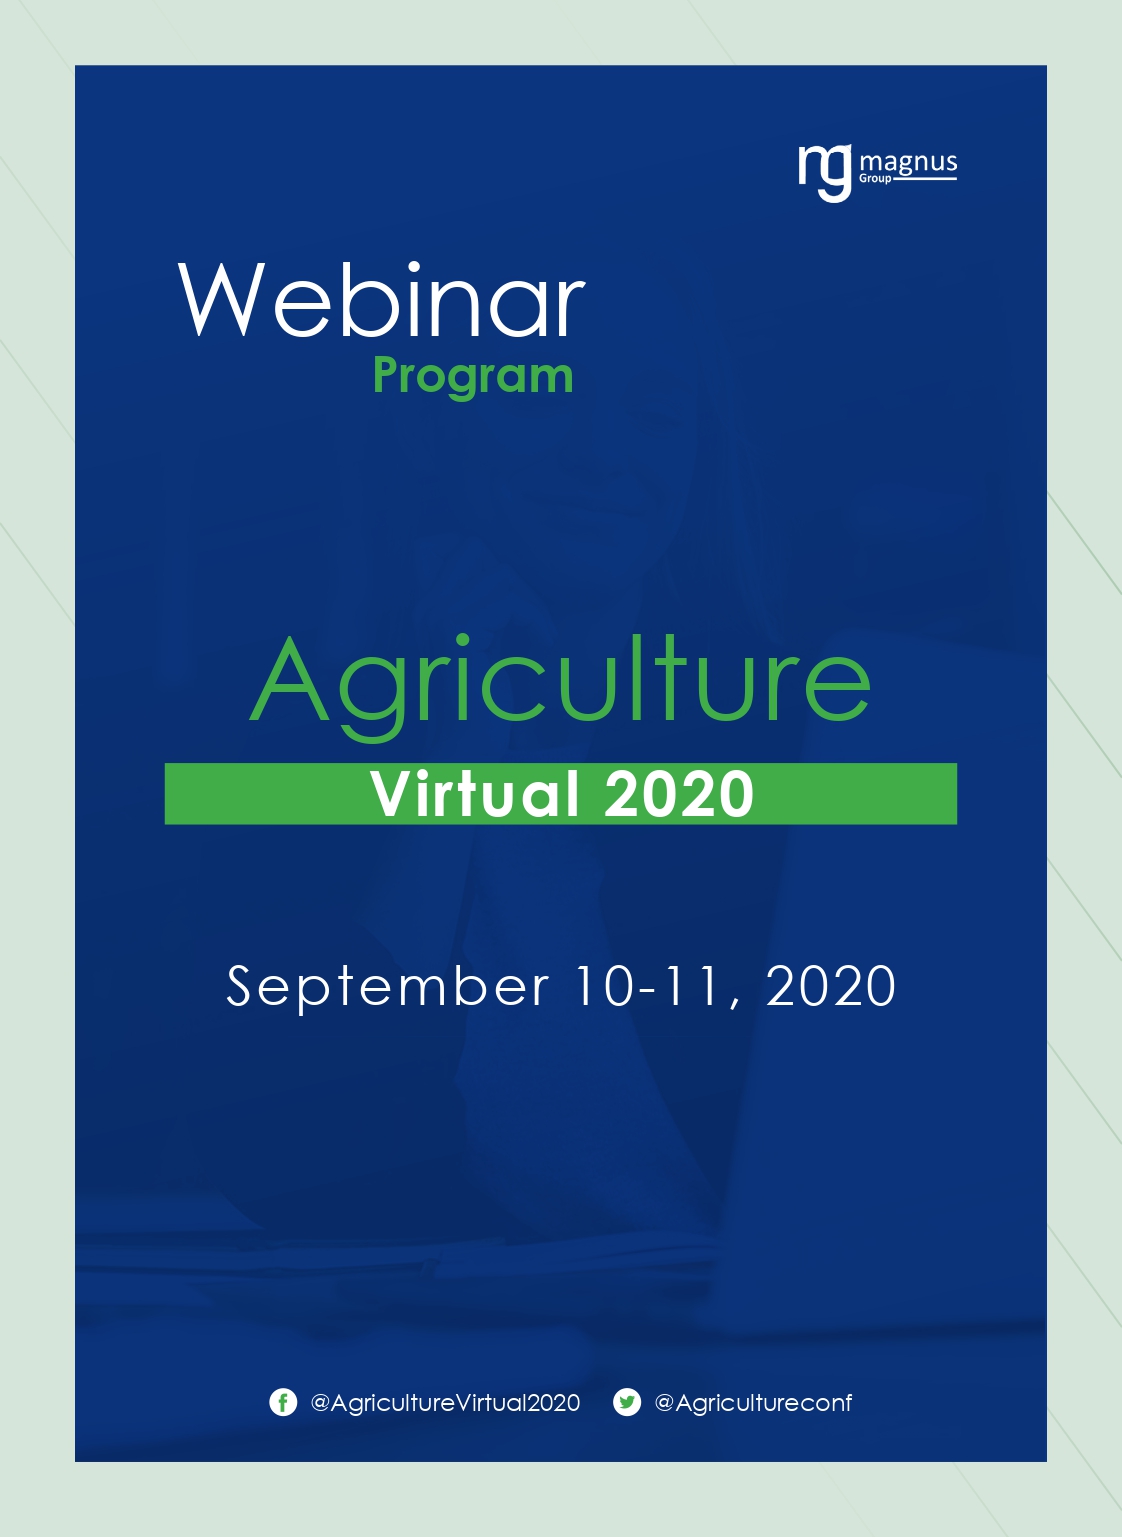 International Webinar on Agriculture and Horticulture | Online Event Program